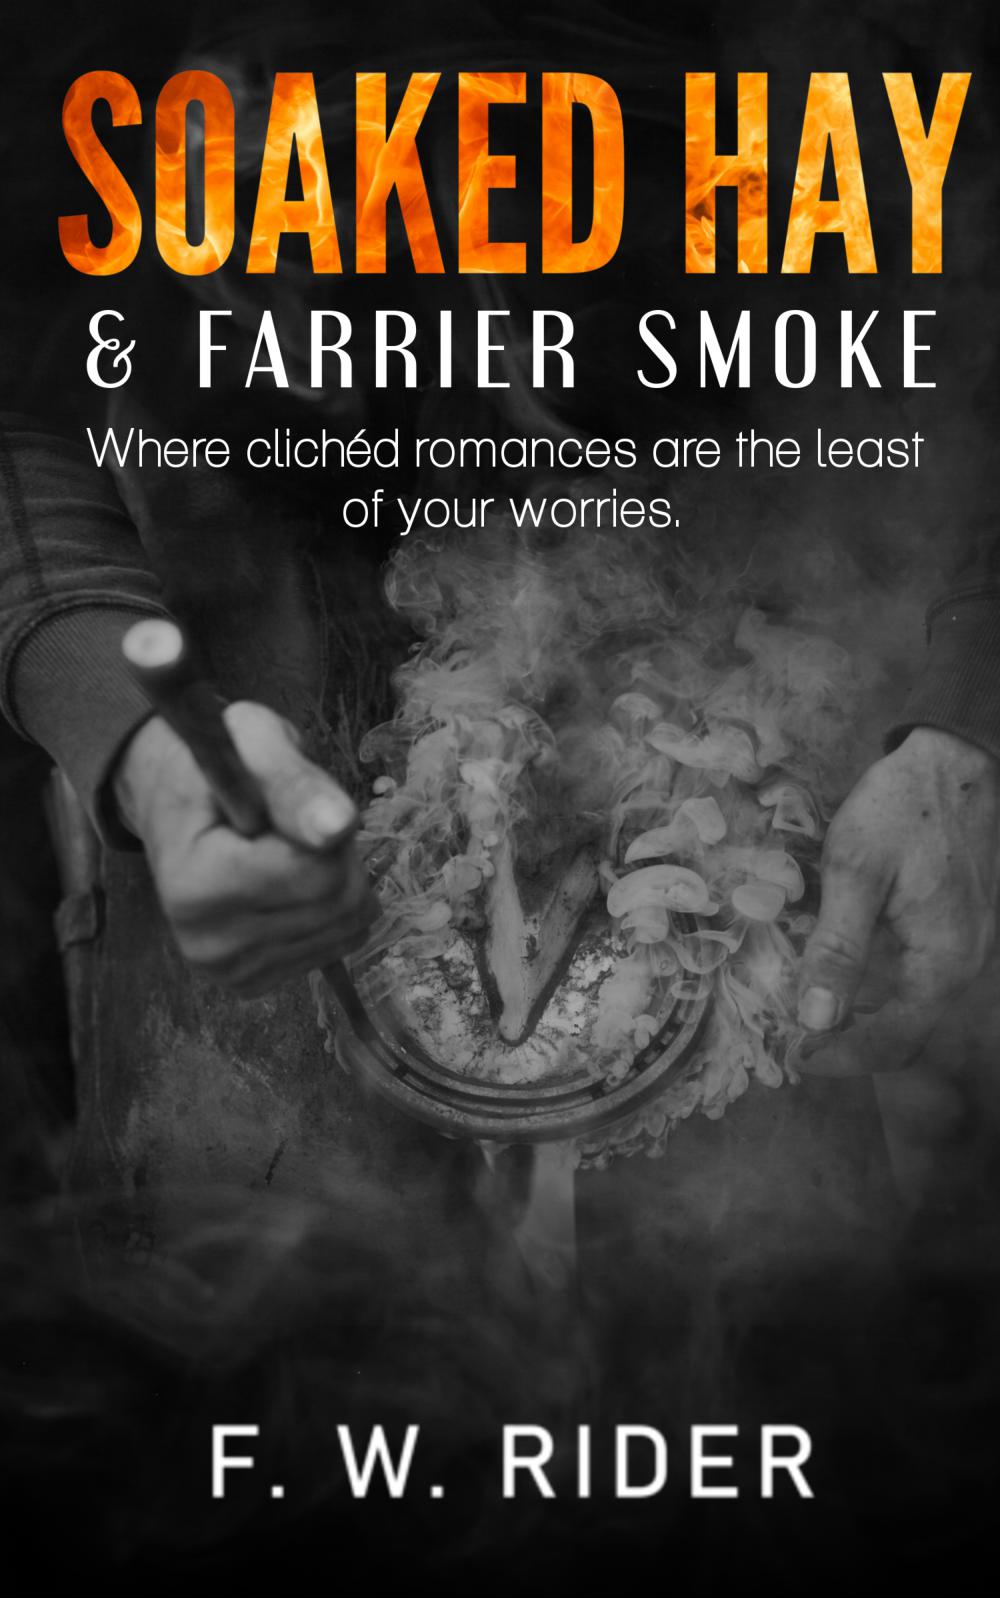 Soaked Hay & Farrier Smoke